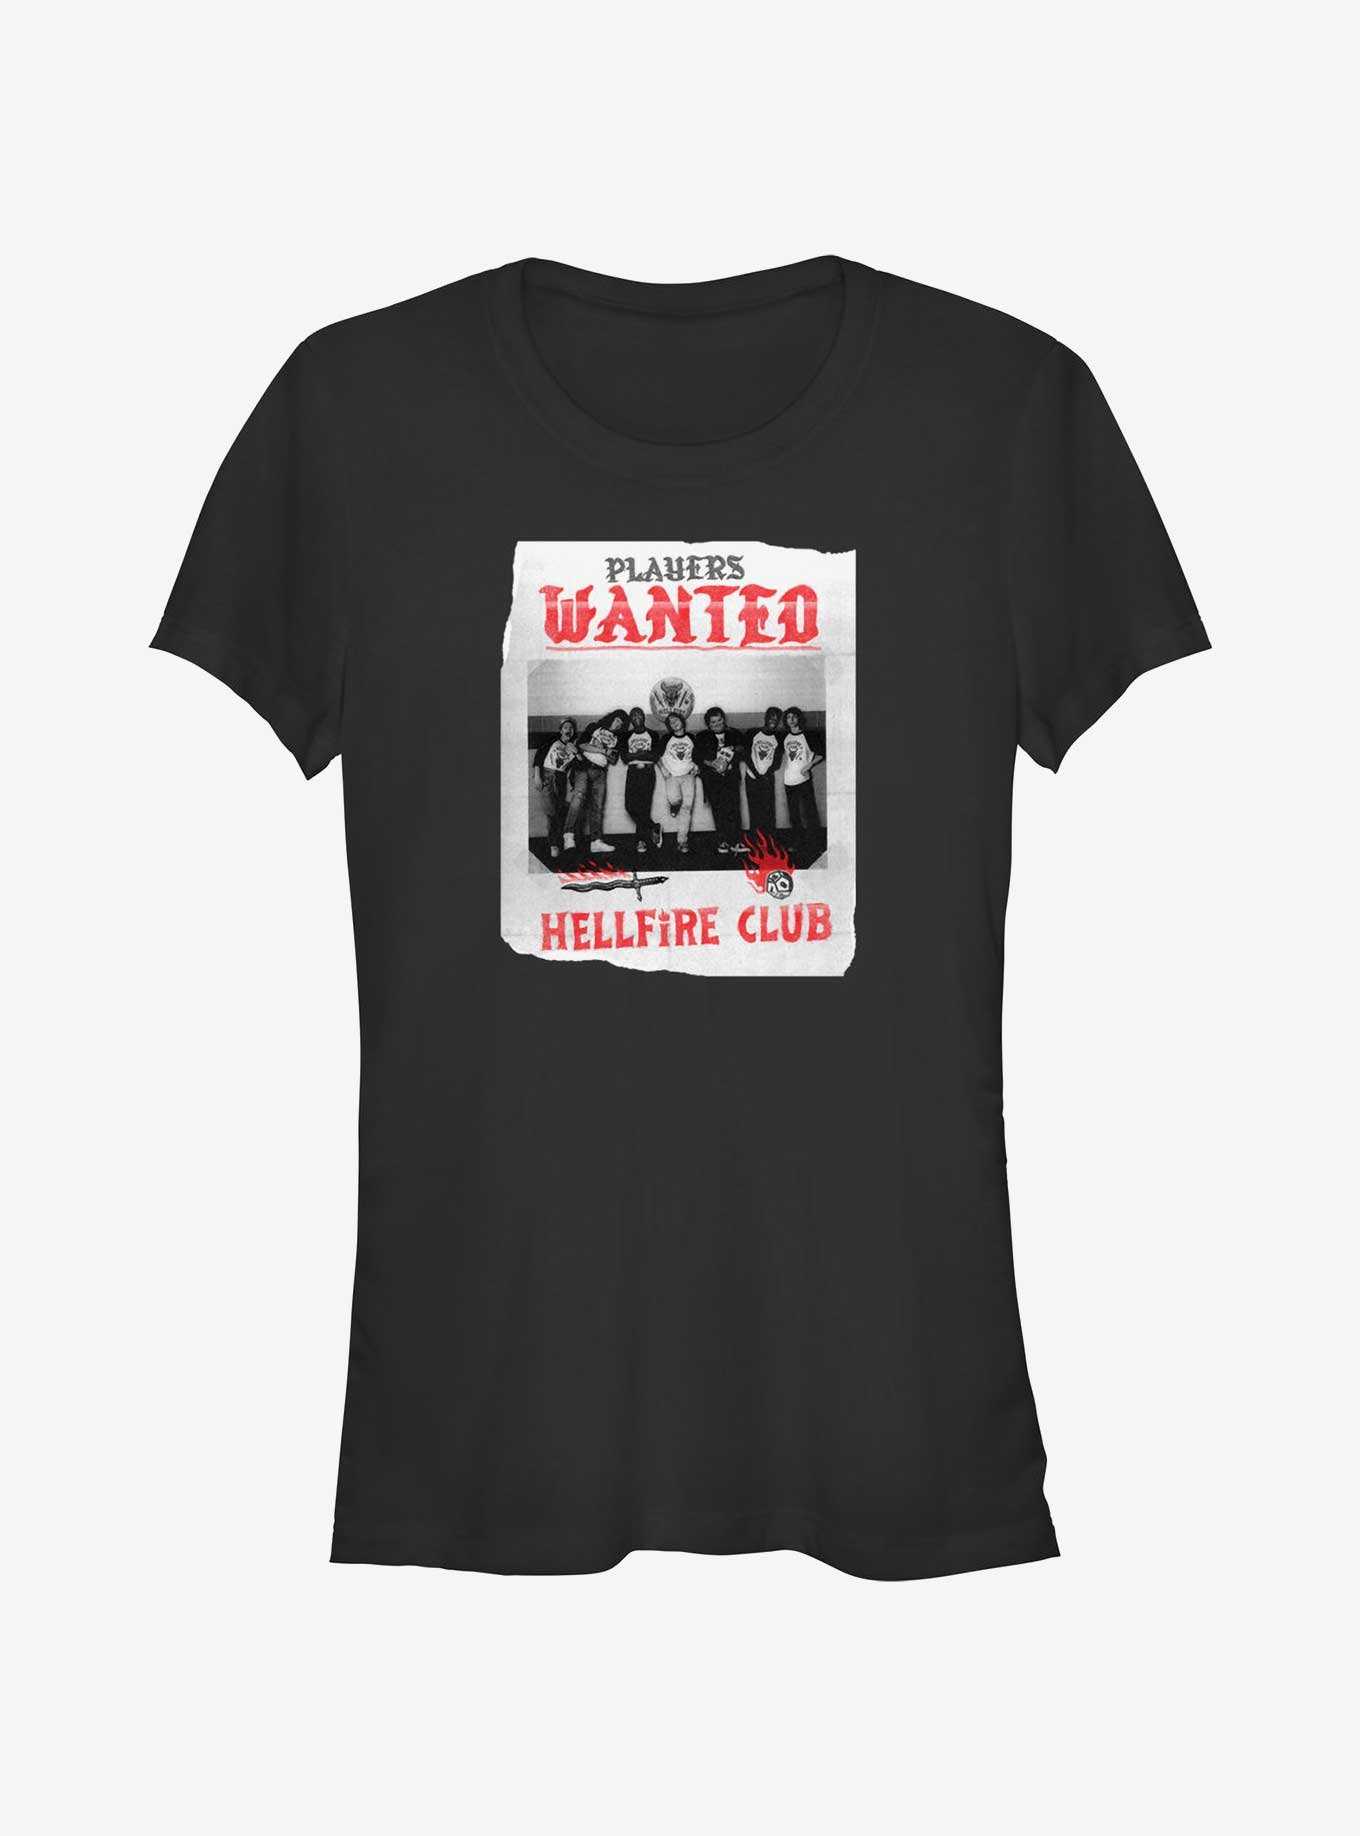 Stranger Things Hellfire Club Players Wanted Poster Girls T-Shirt, , hi-res